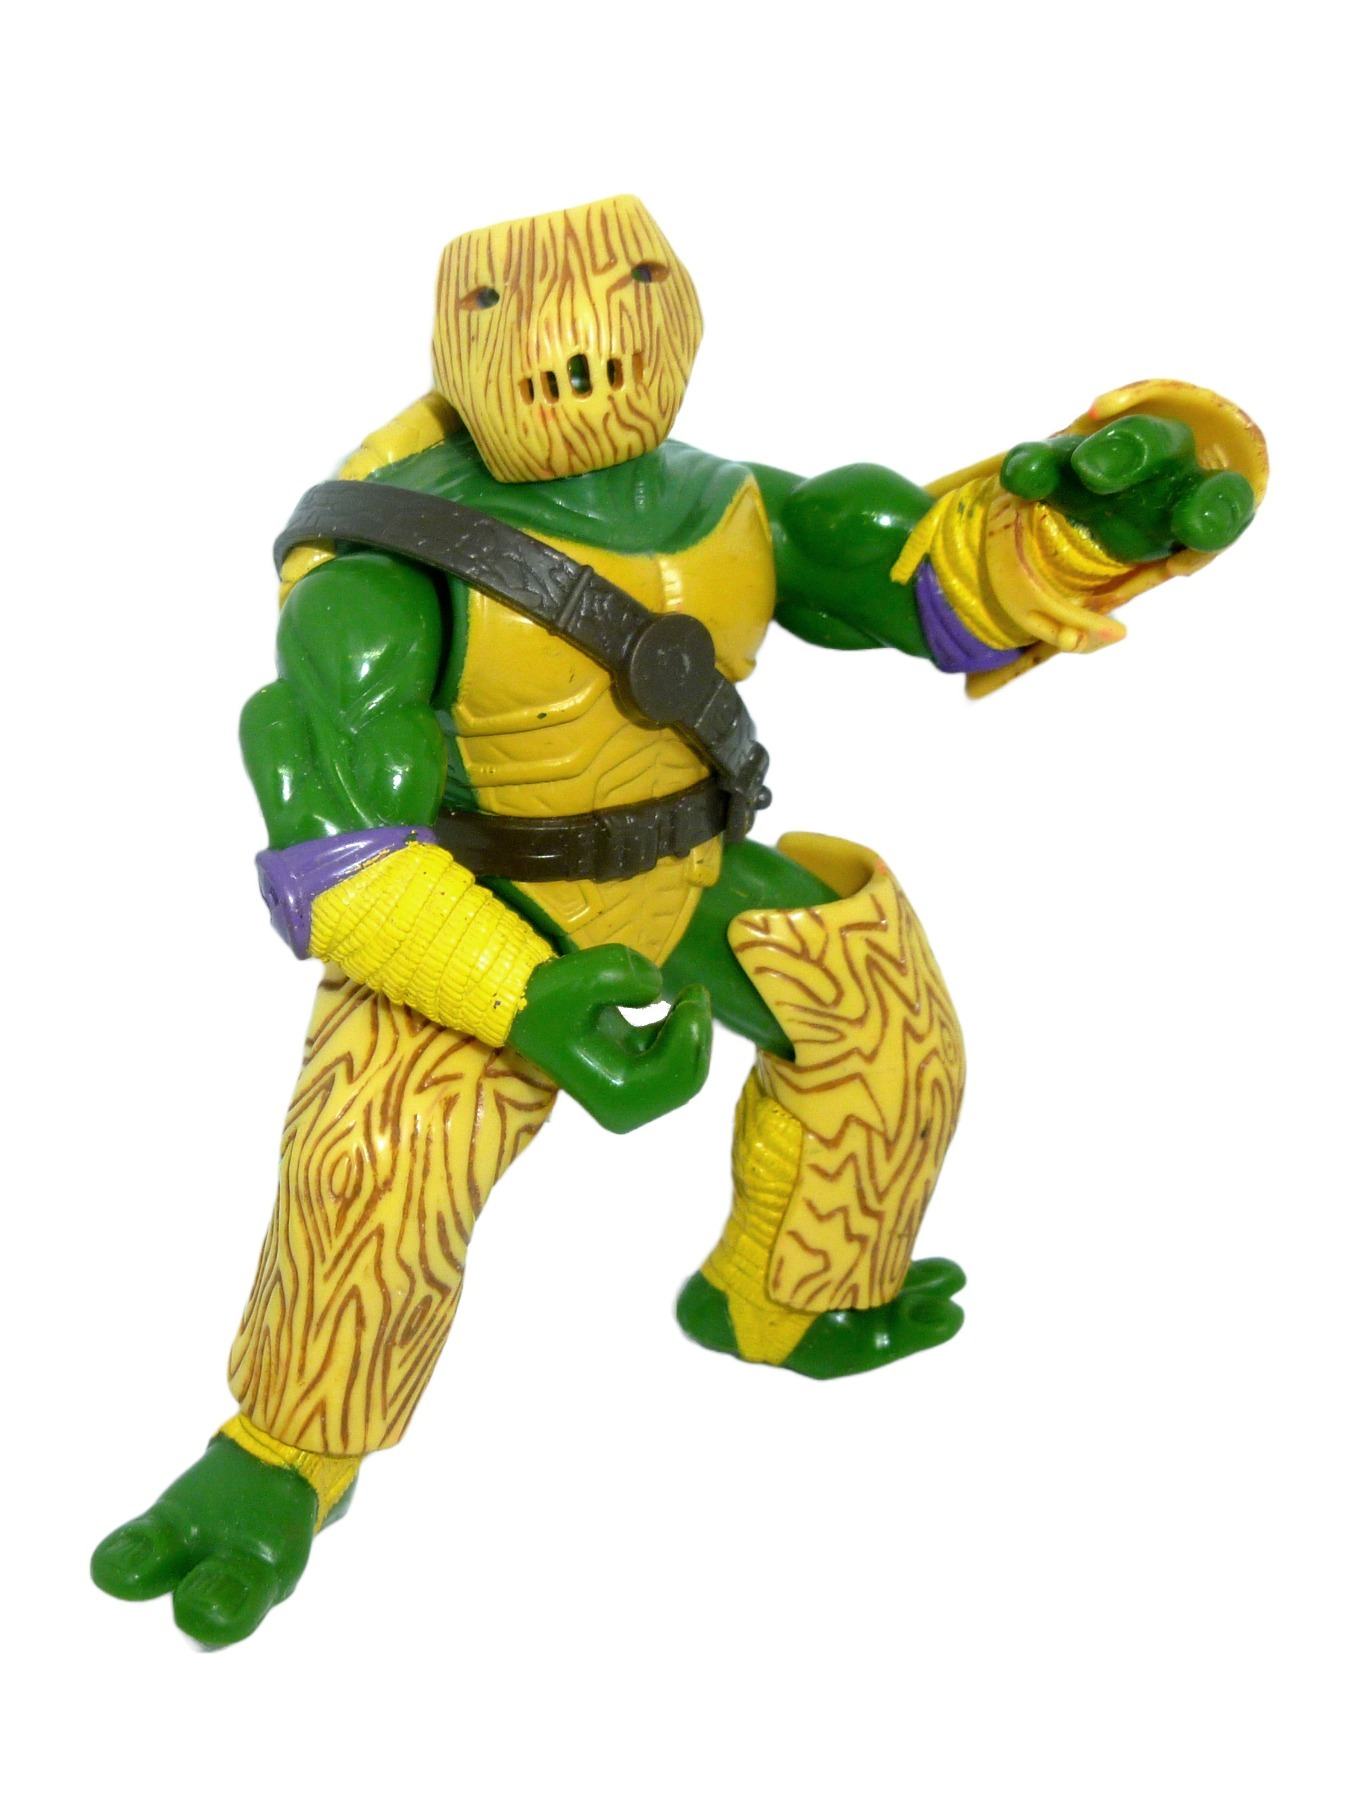 Don Camo-Armor - Turtleflage 1997 Mirage Studios / Playmates Toys